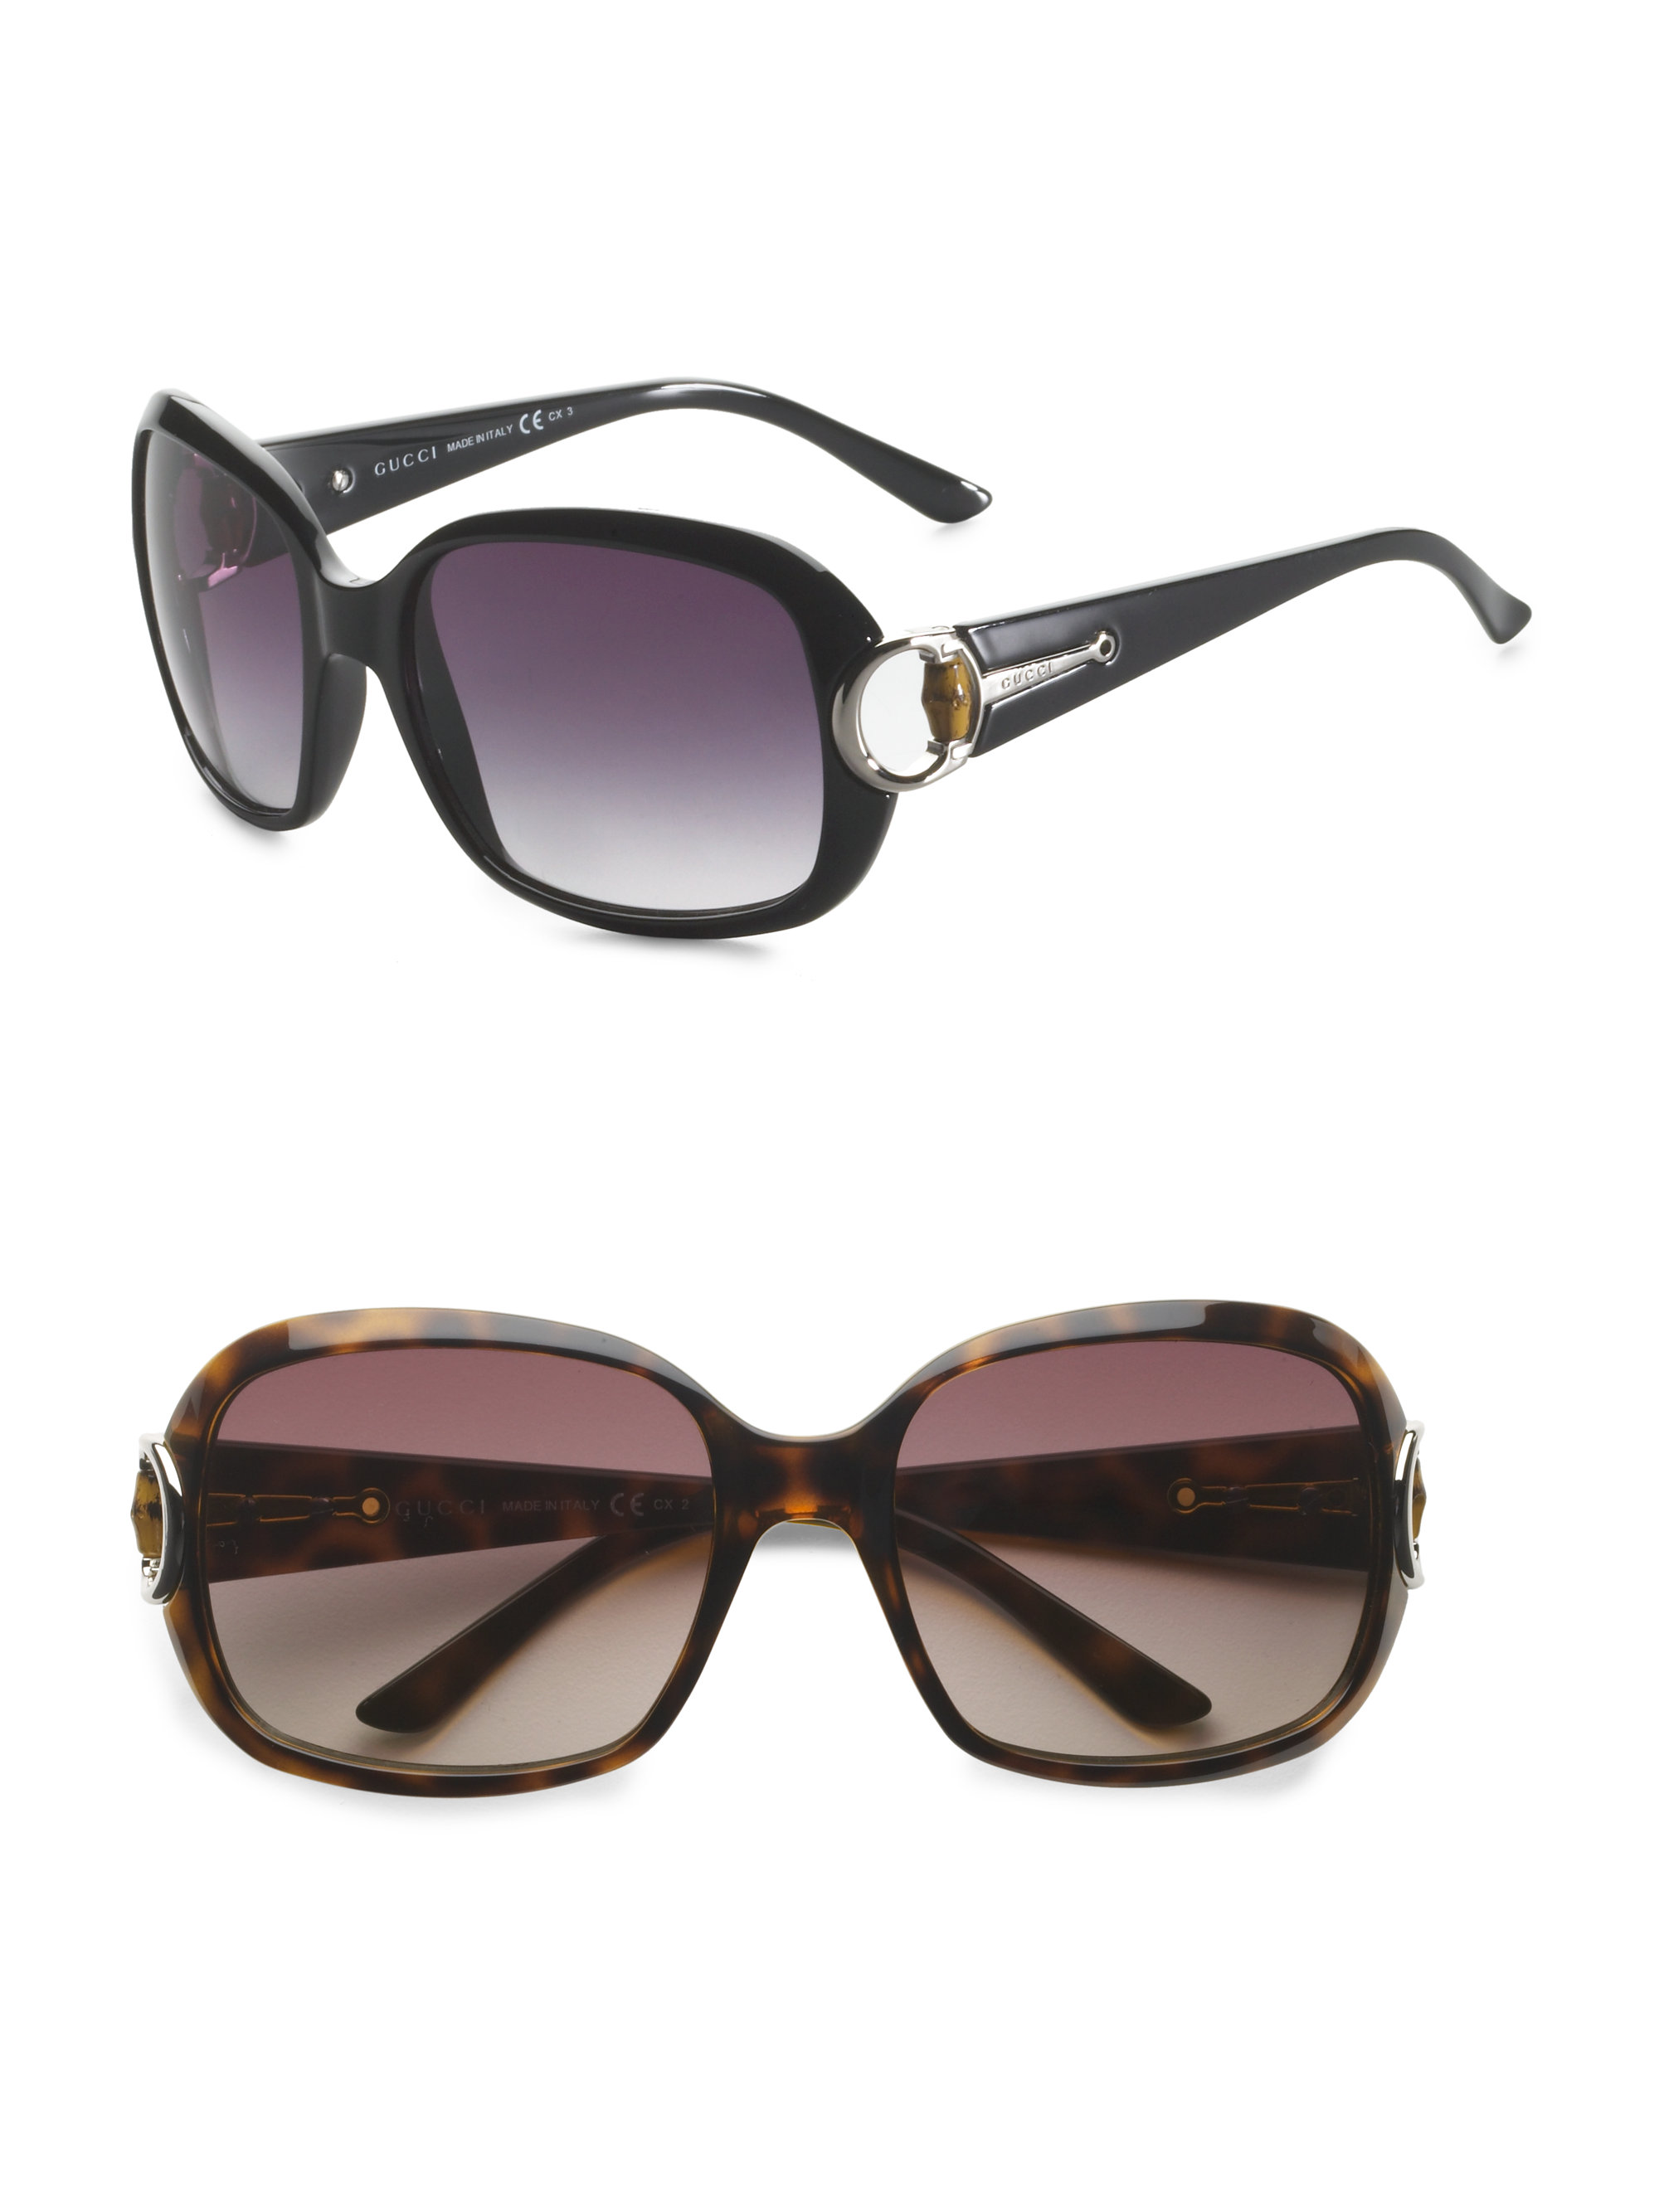 Gucci Horsebit Sunglasses in Brown - Lyst